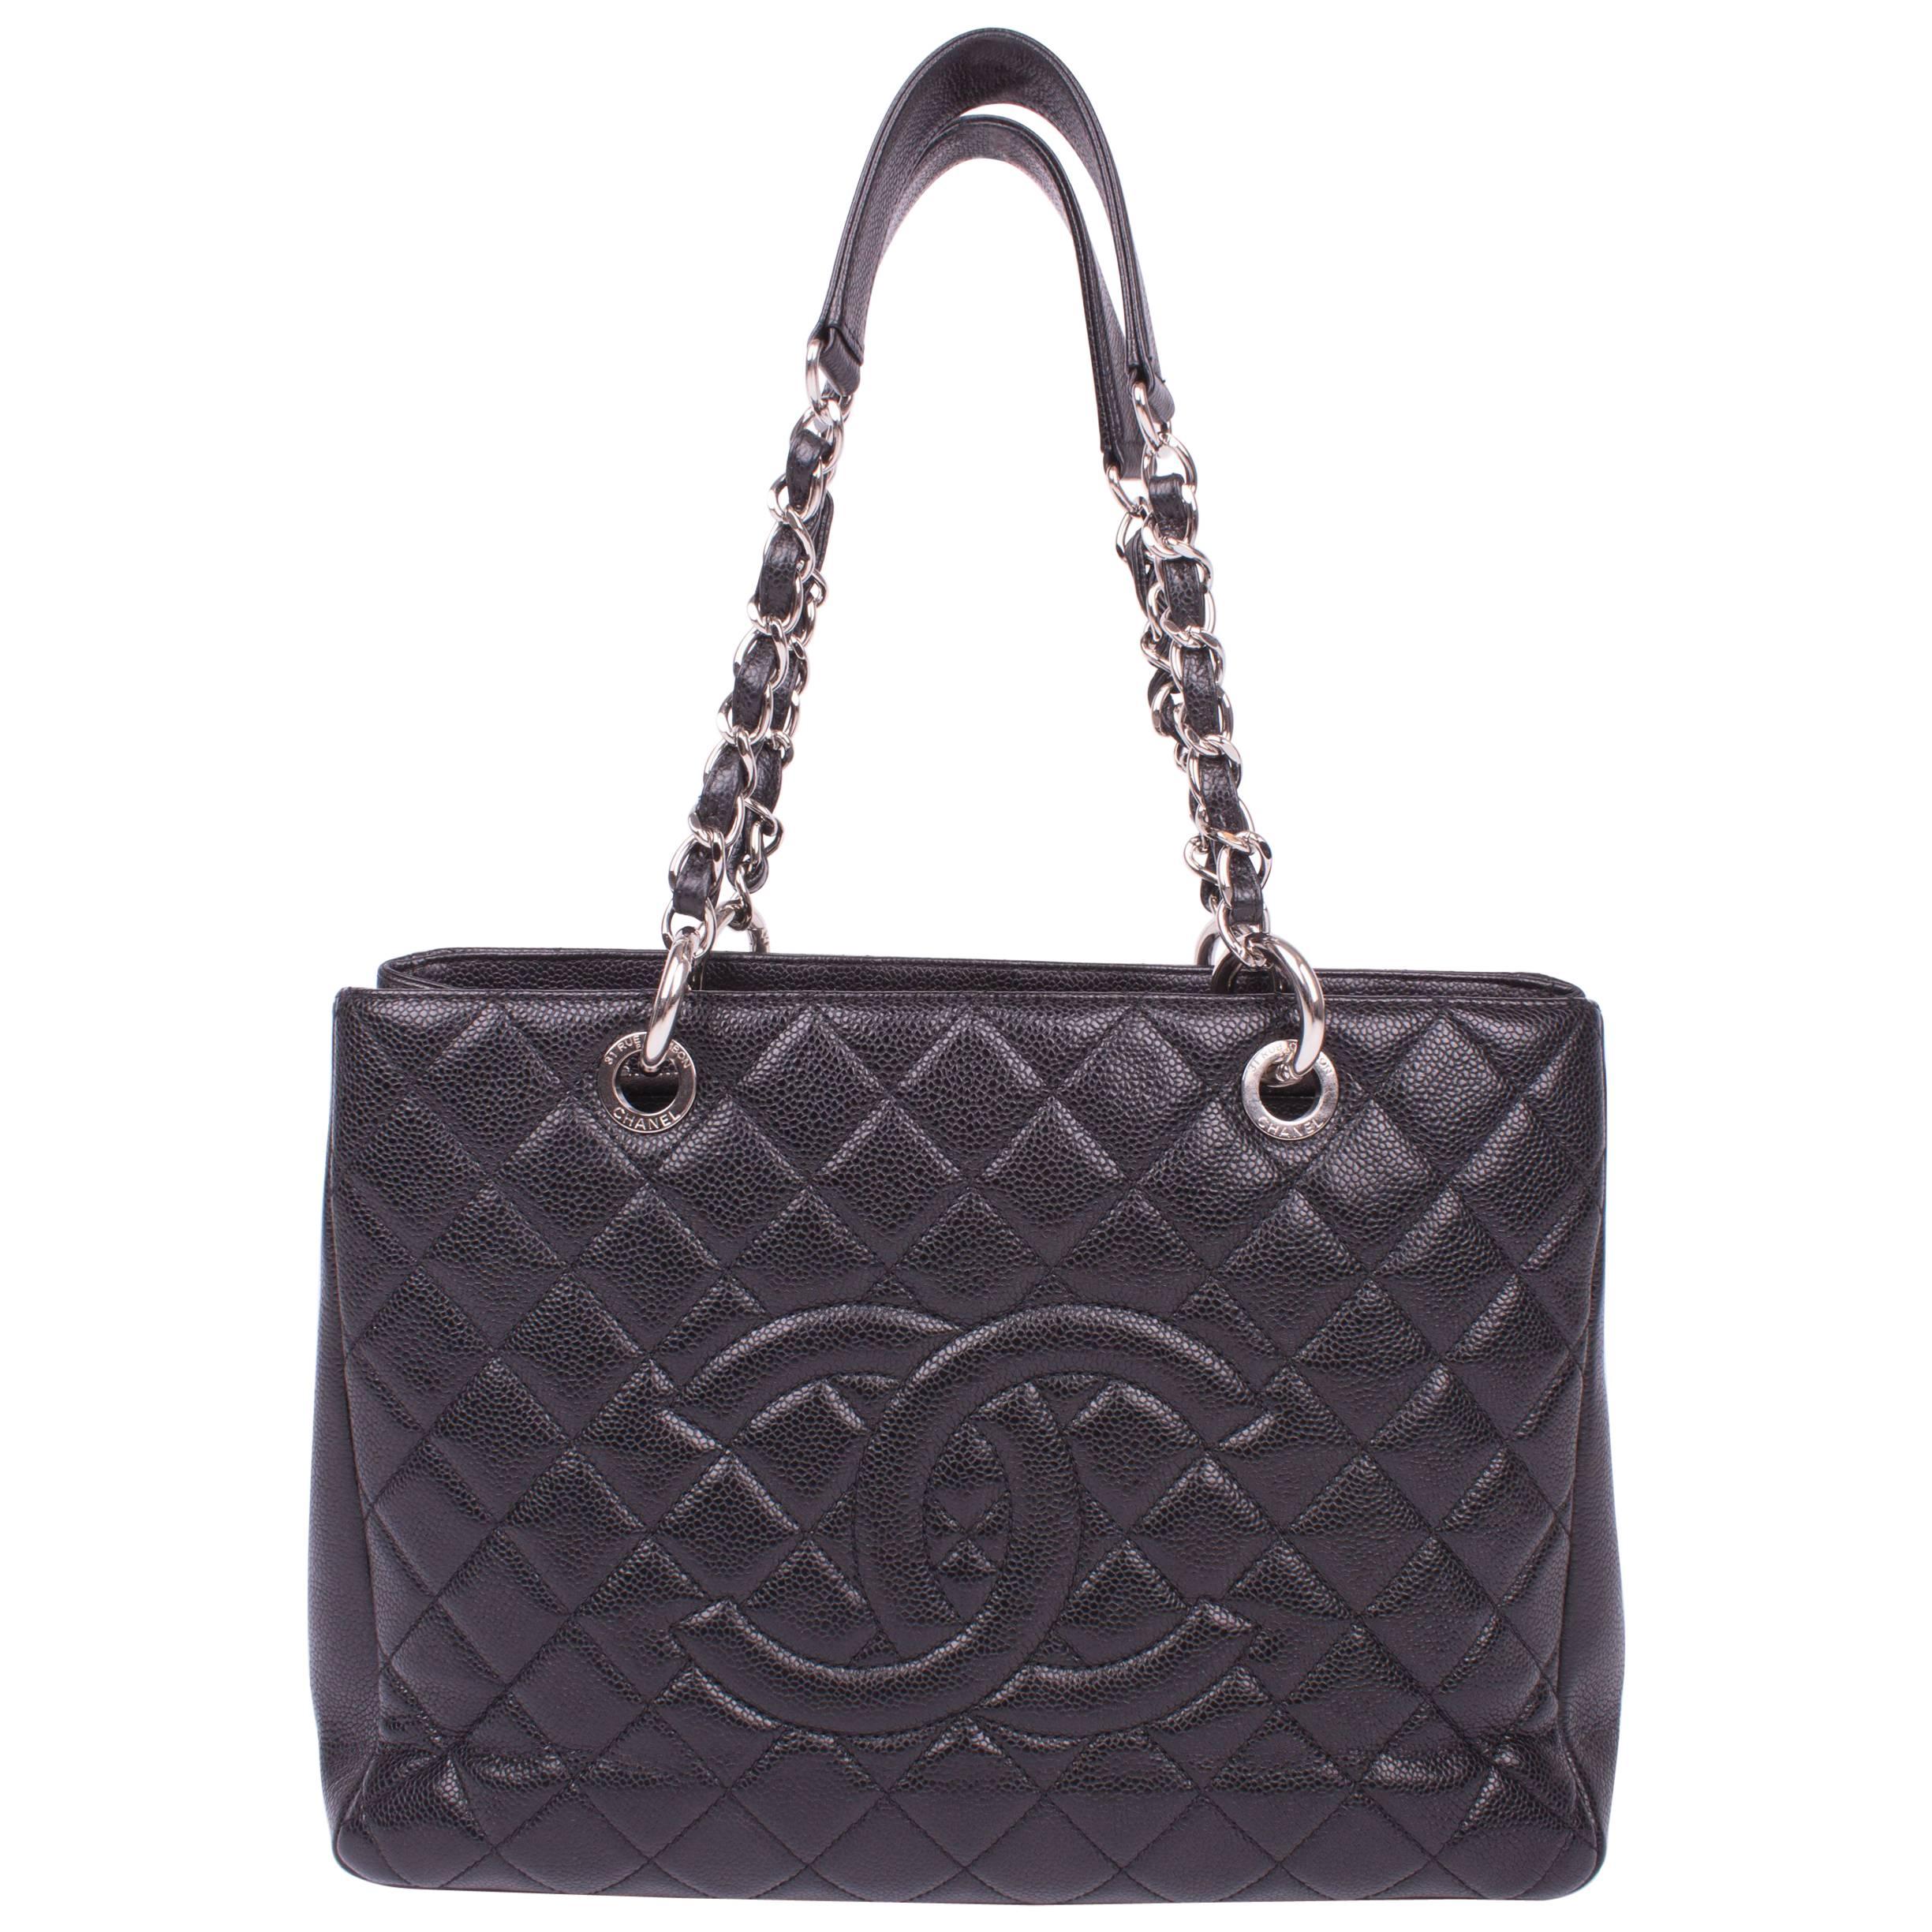 Chanel Grand Shopper Bag - black caviar leather